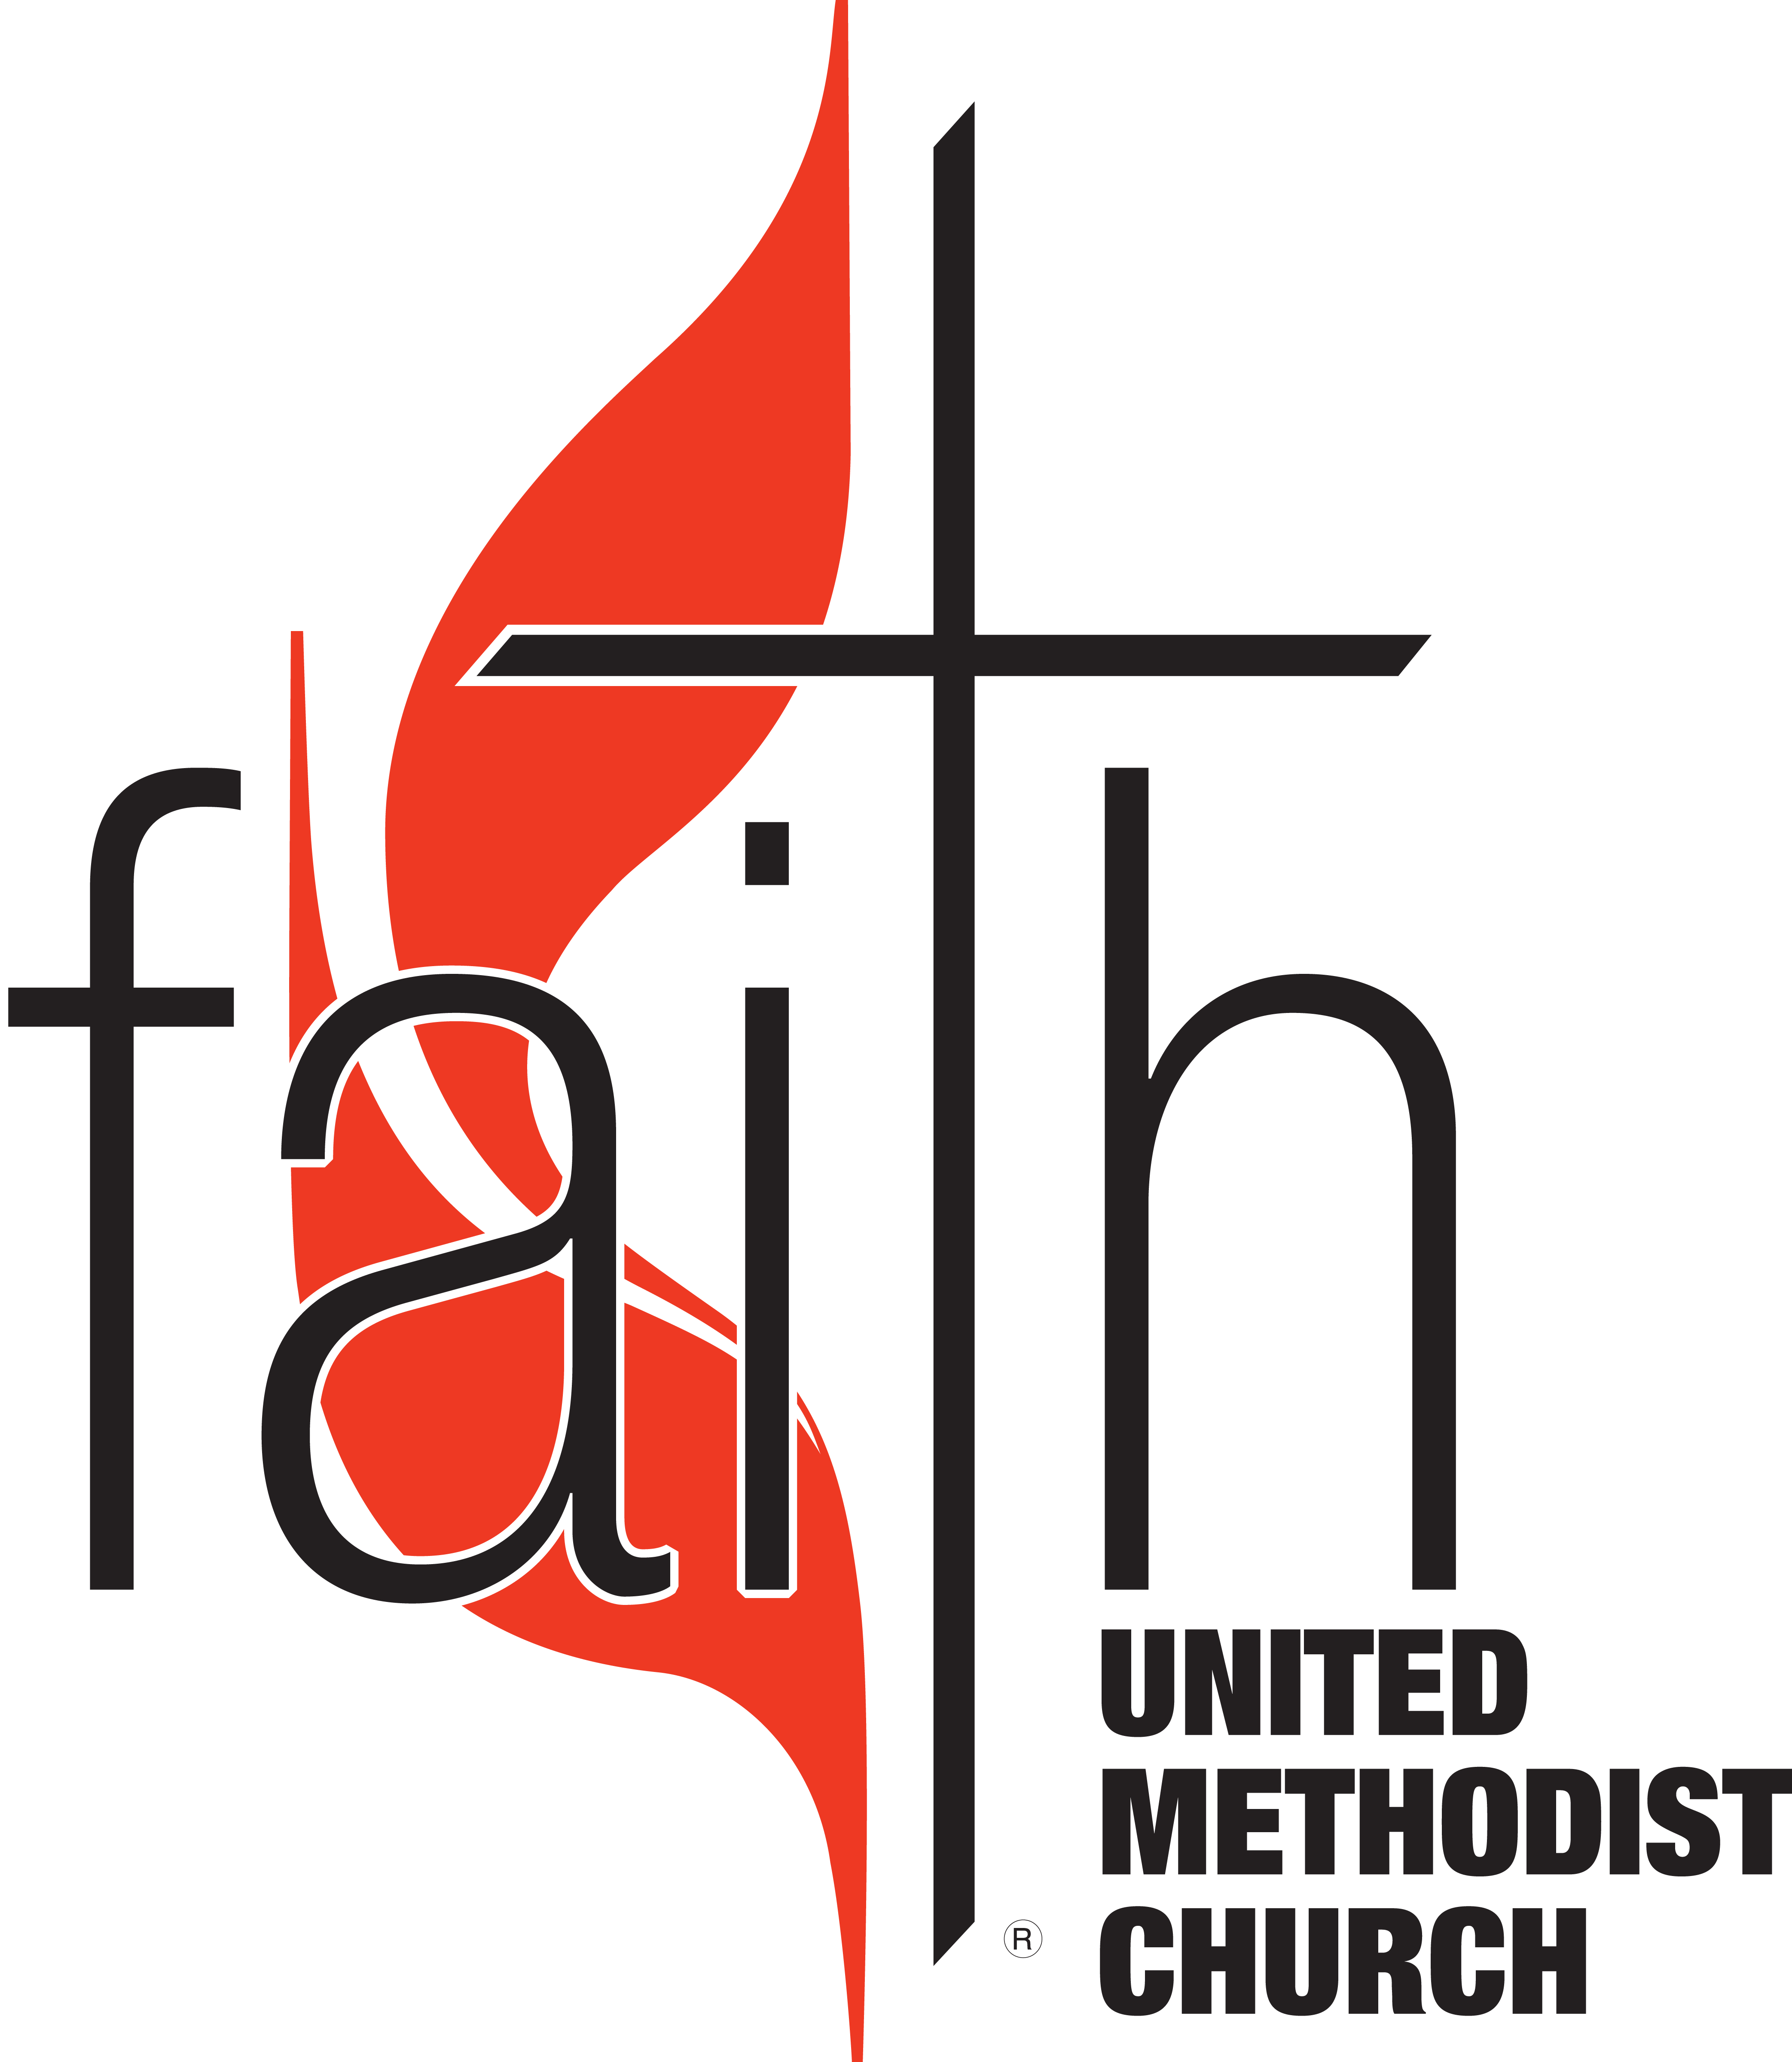 Fumc Logo 2c - Faith United Methodist Church (4171x4800)